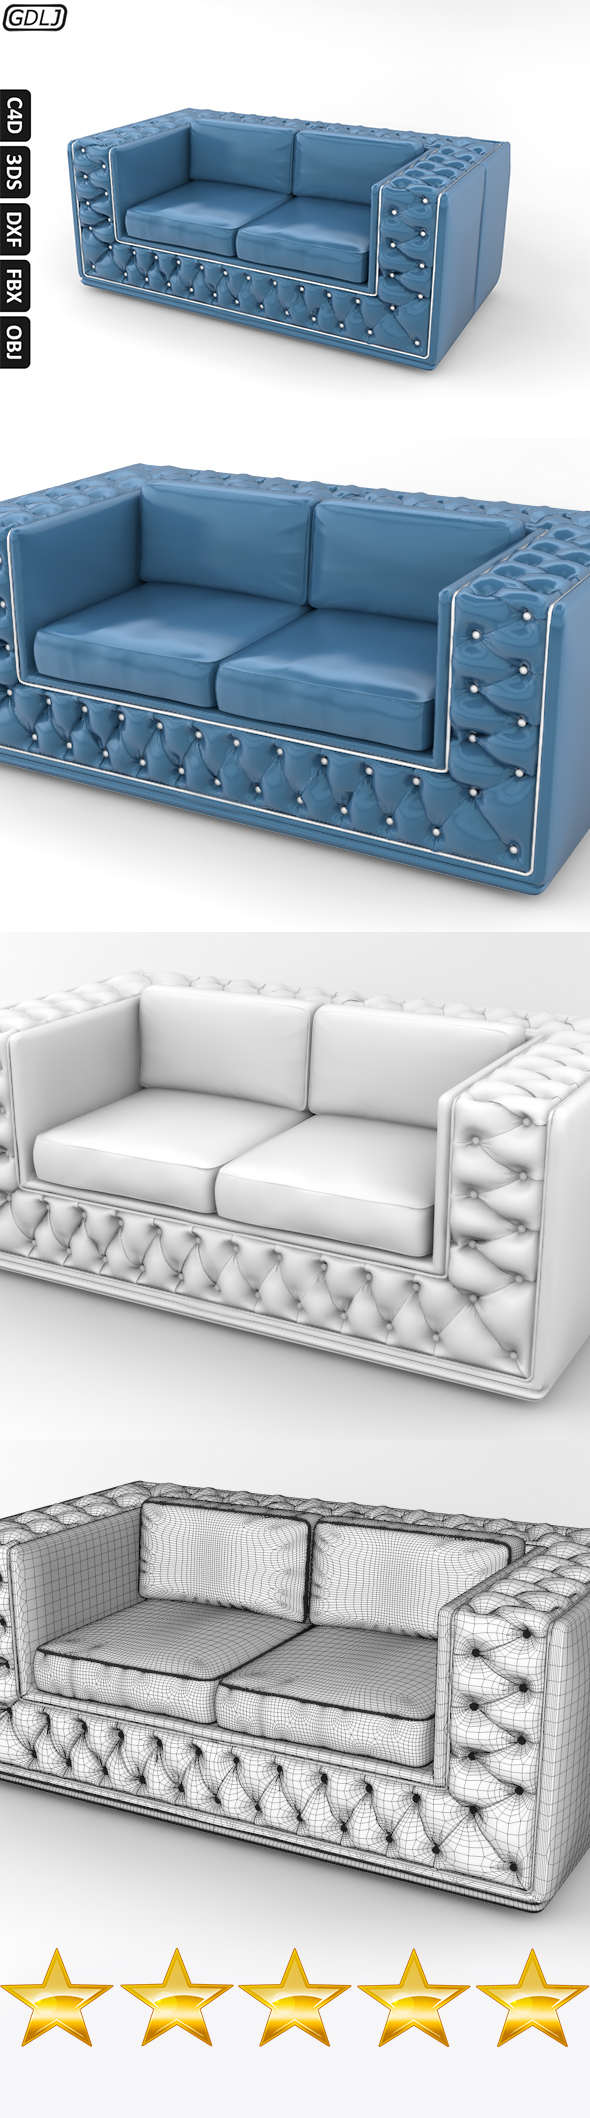 Fashionable leather sofa - 3Docean 23271747